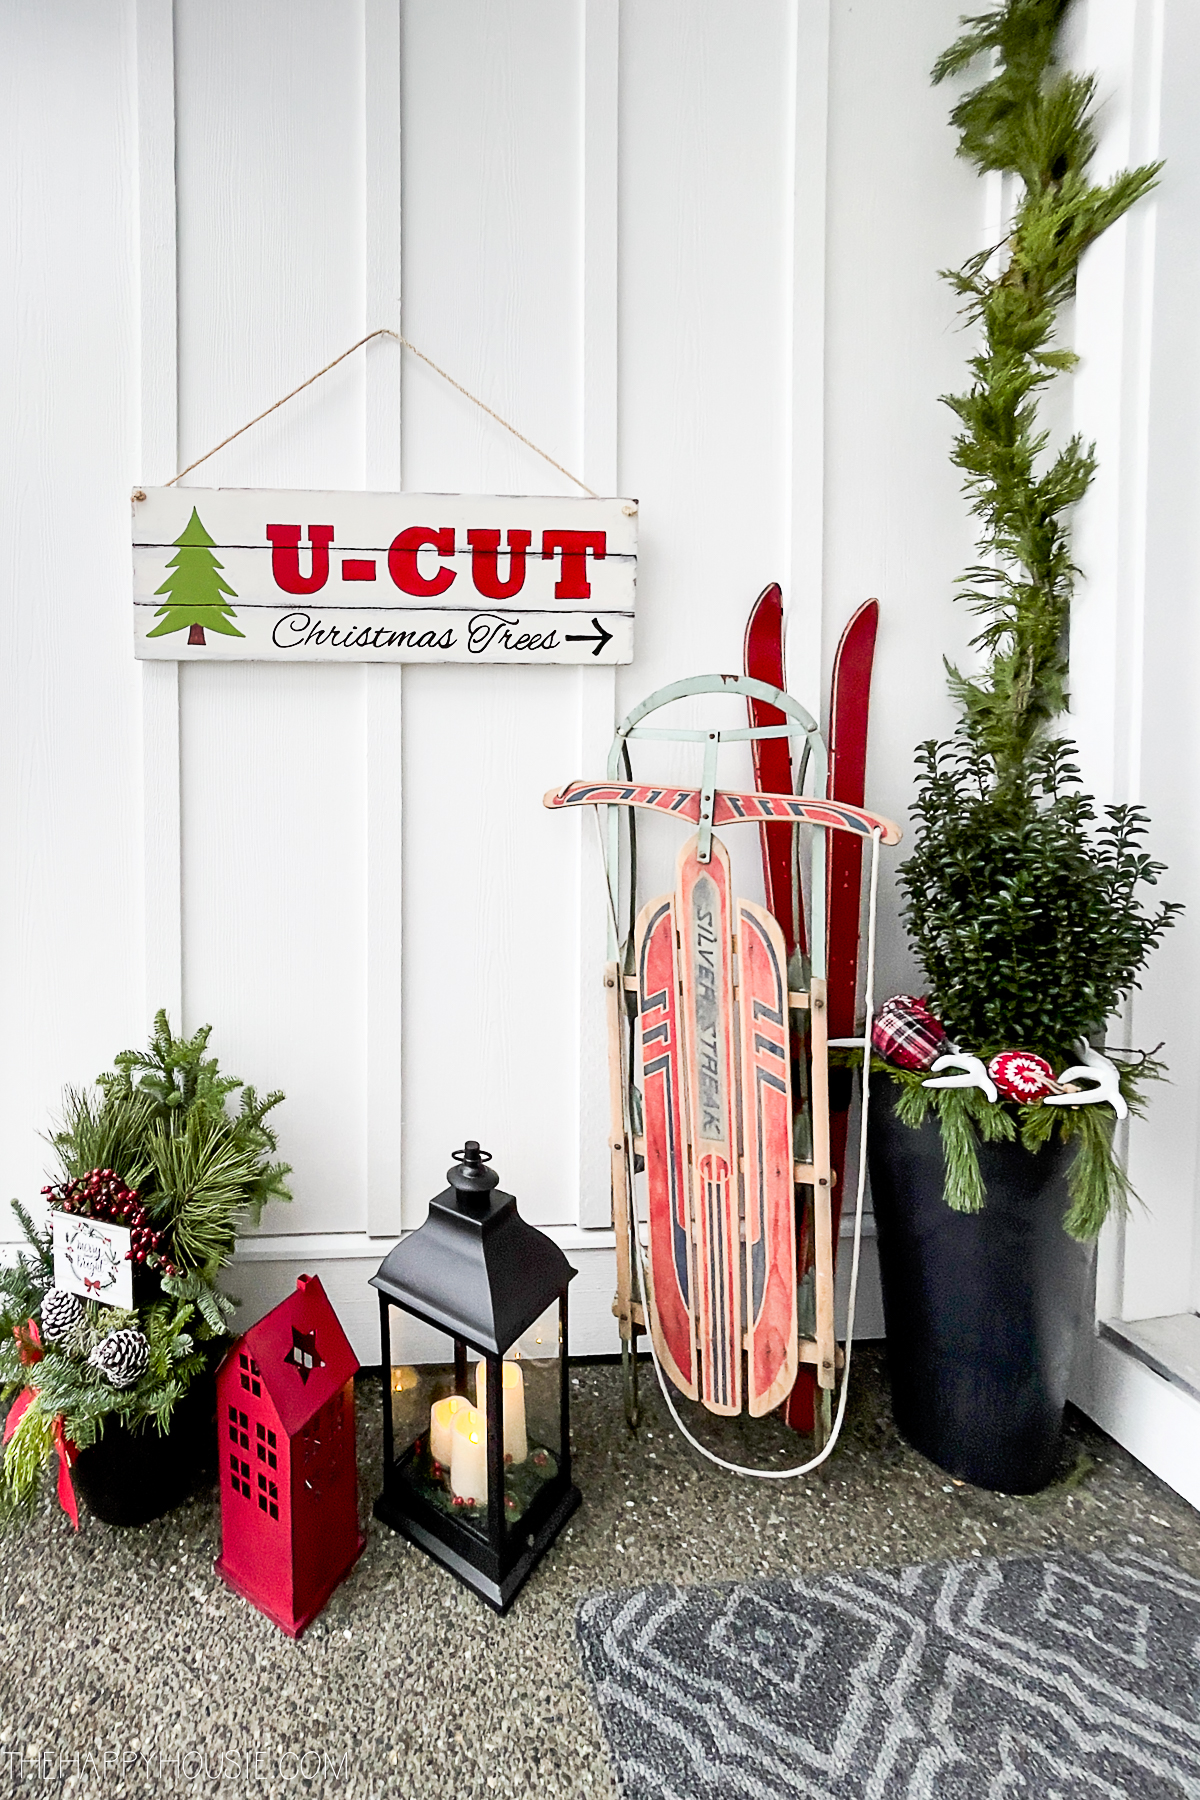 A cheerful DIY U-Cut Christmas Trees sign.